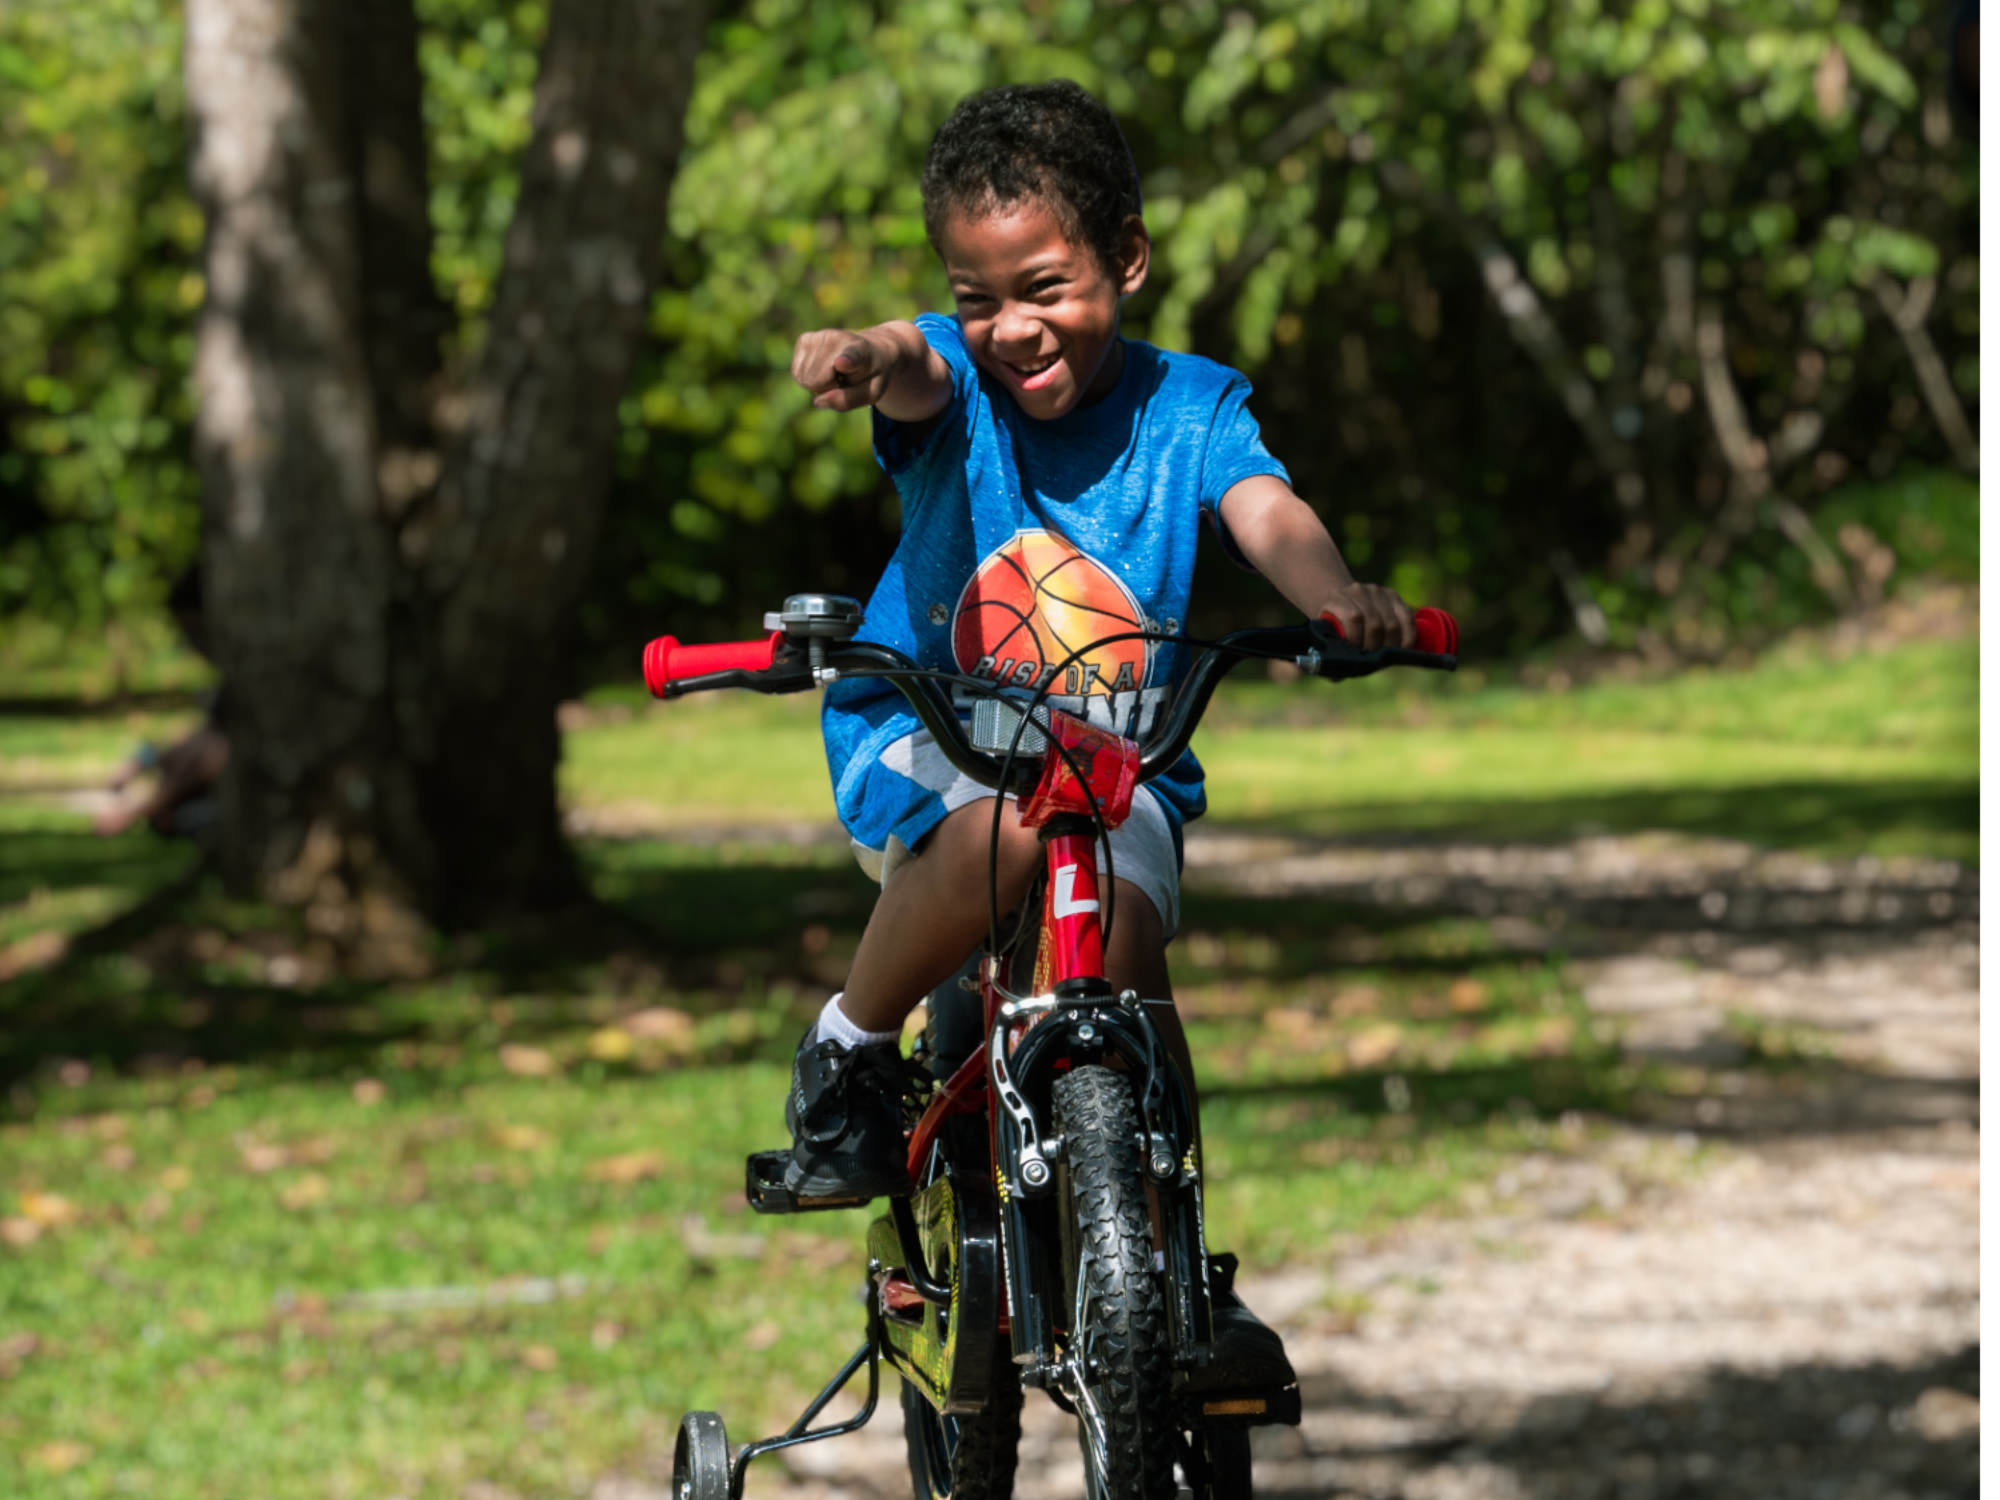 BICICLETA INFANTIL 16 pulgadas | Bicicleta infantil para niños de aprox. 4 a 6 años